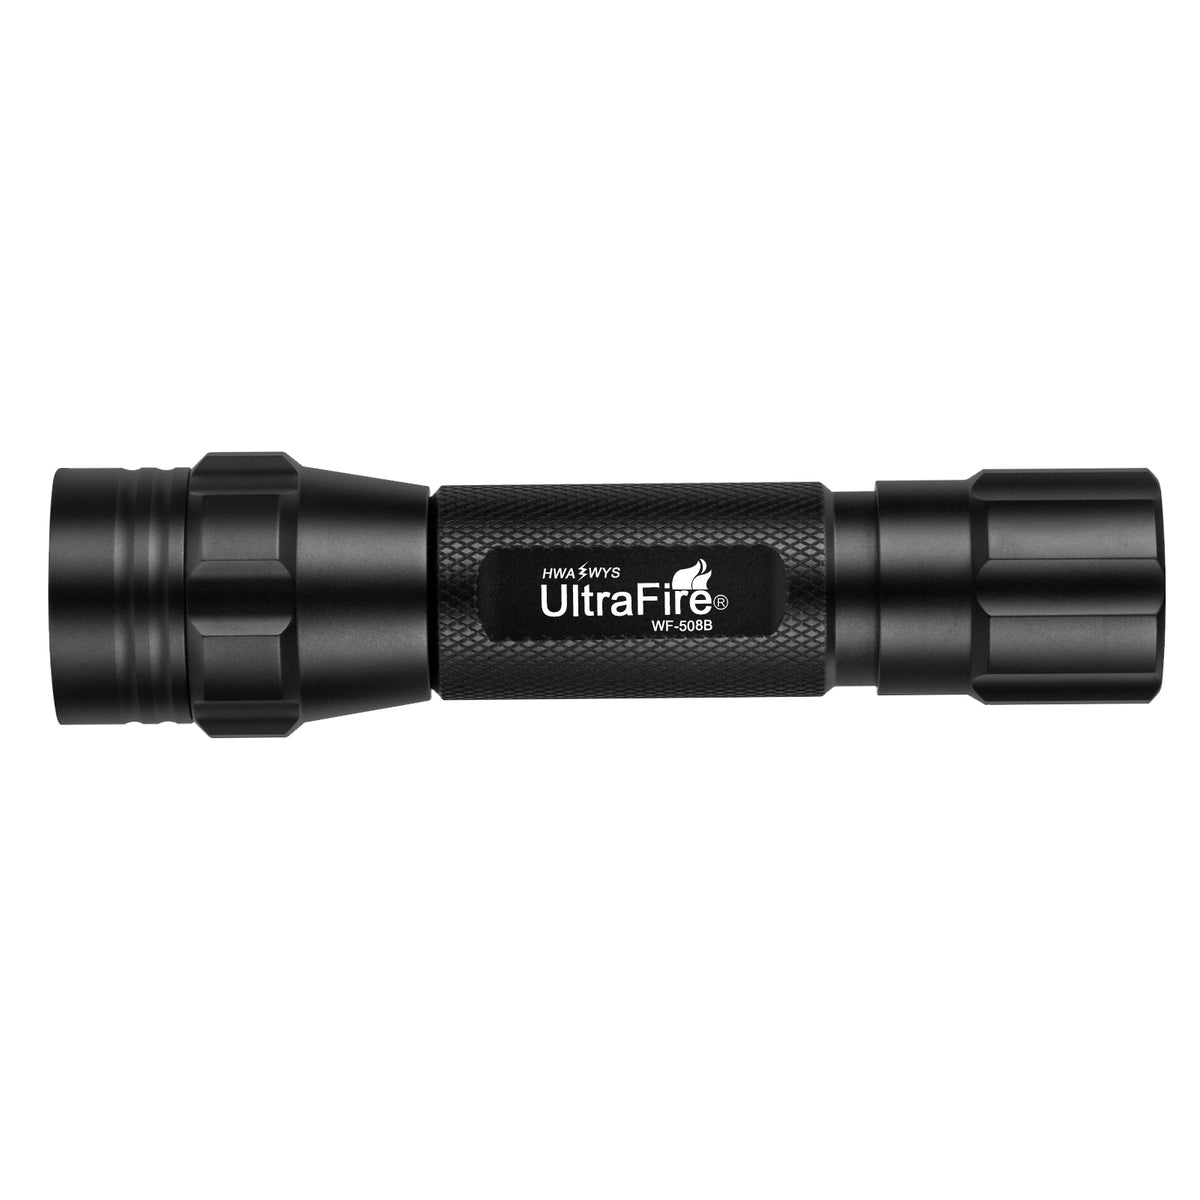 UltraFire Classic WF-508B LED Focusing Hunt Flashlight